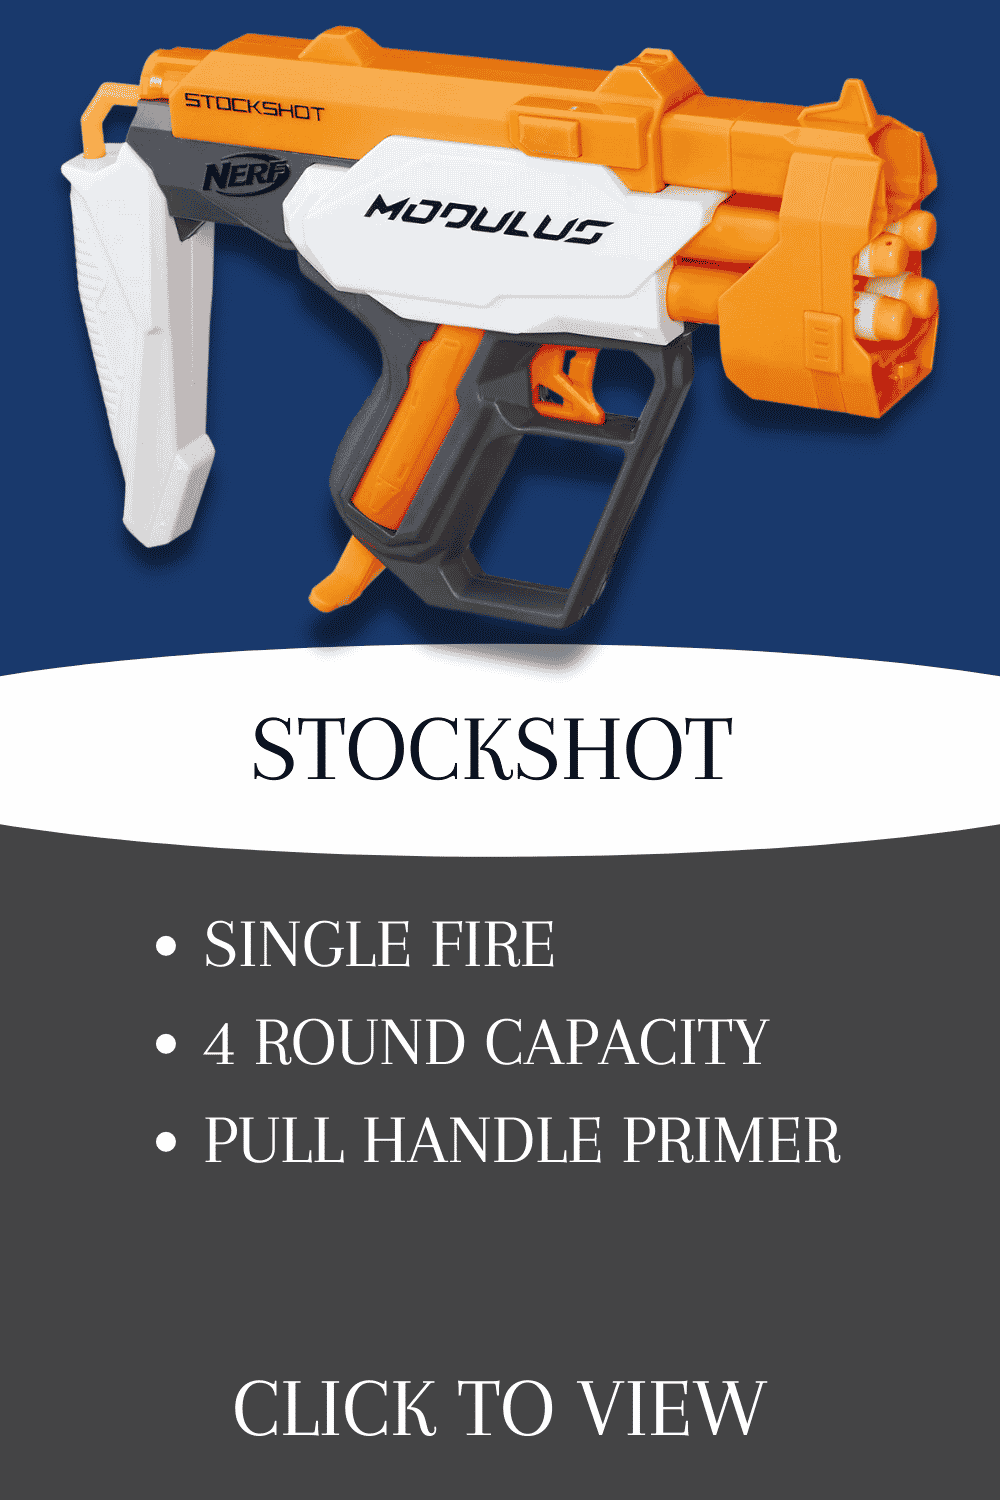 nerf modulus stockshot